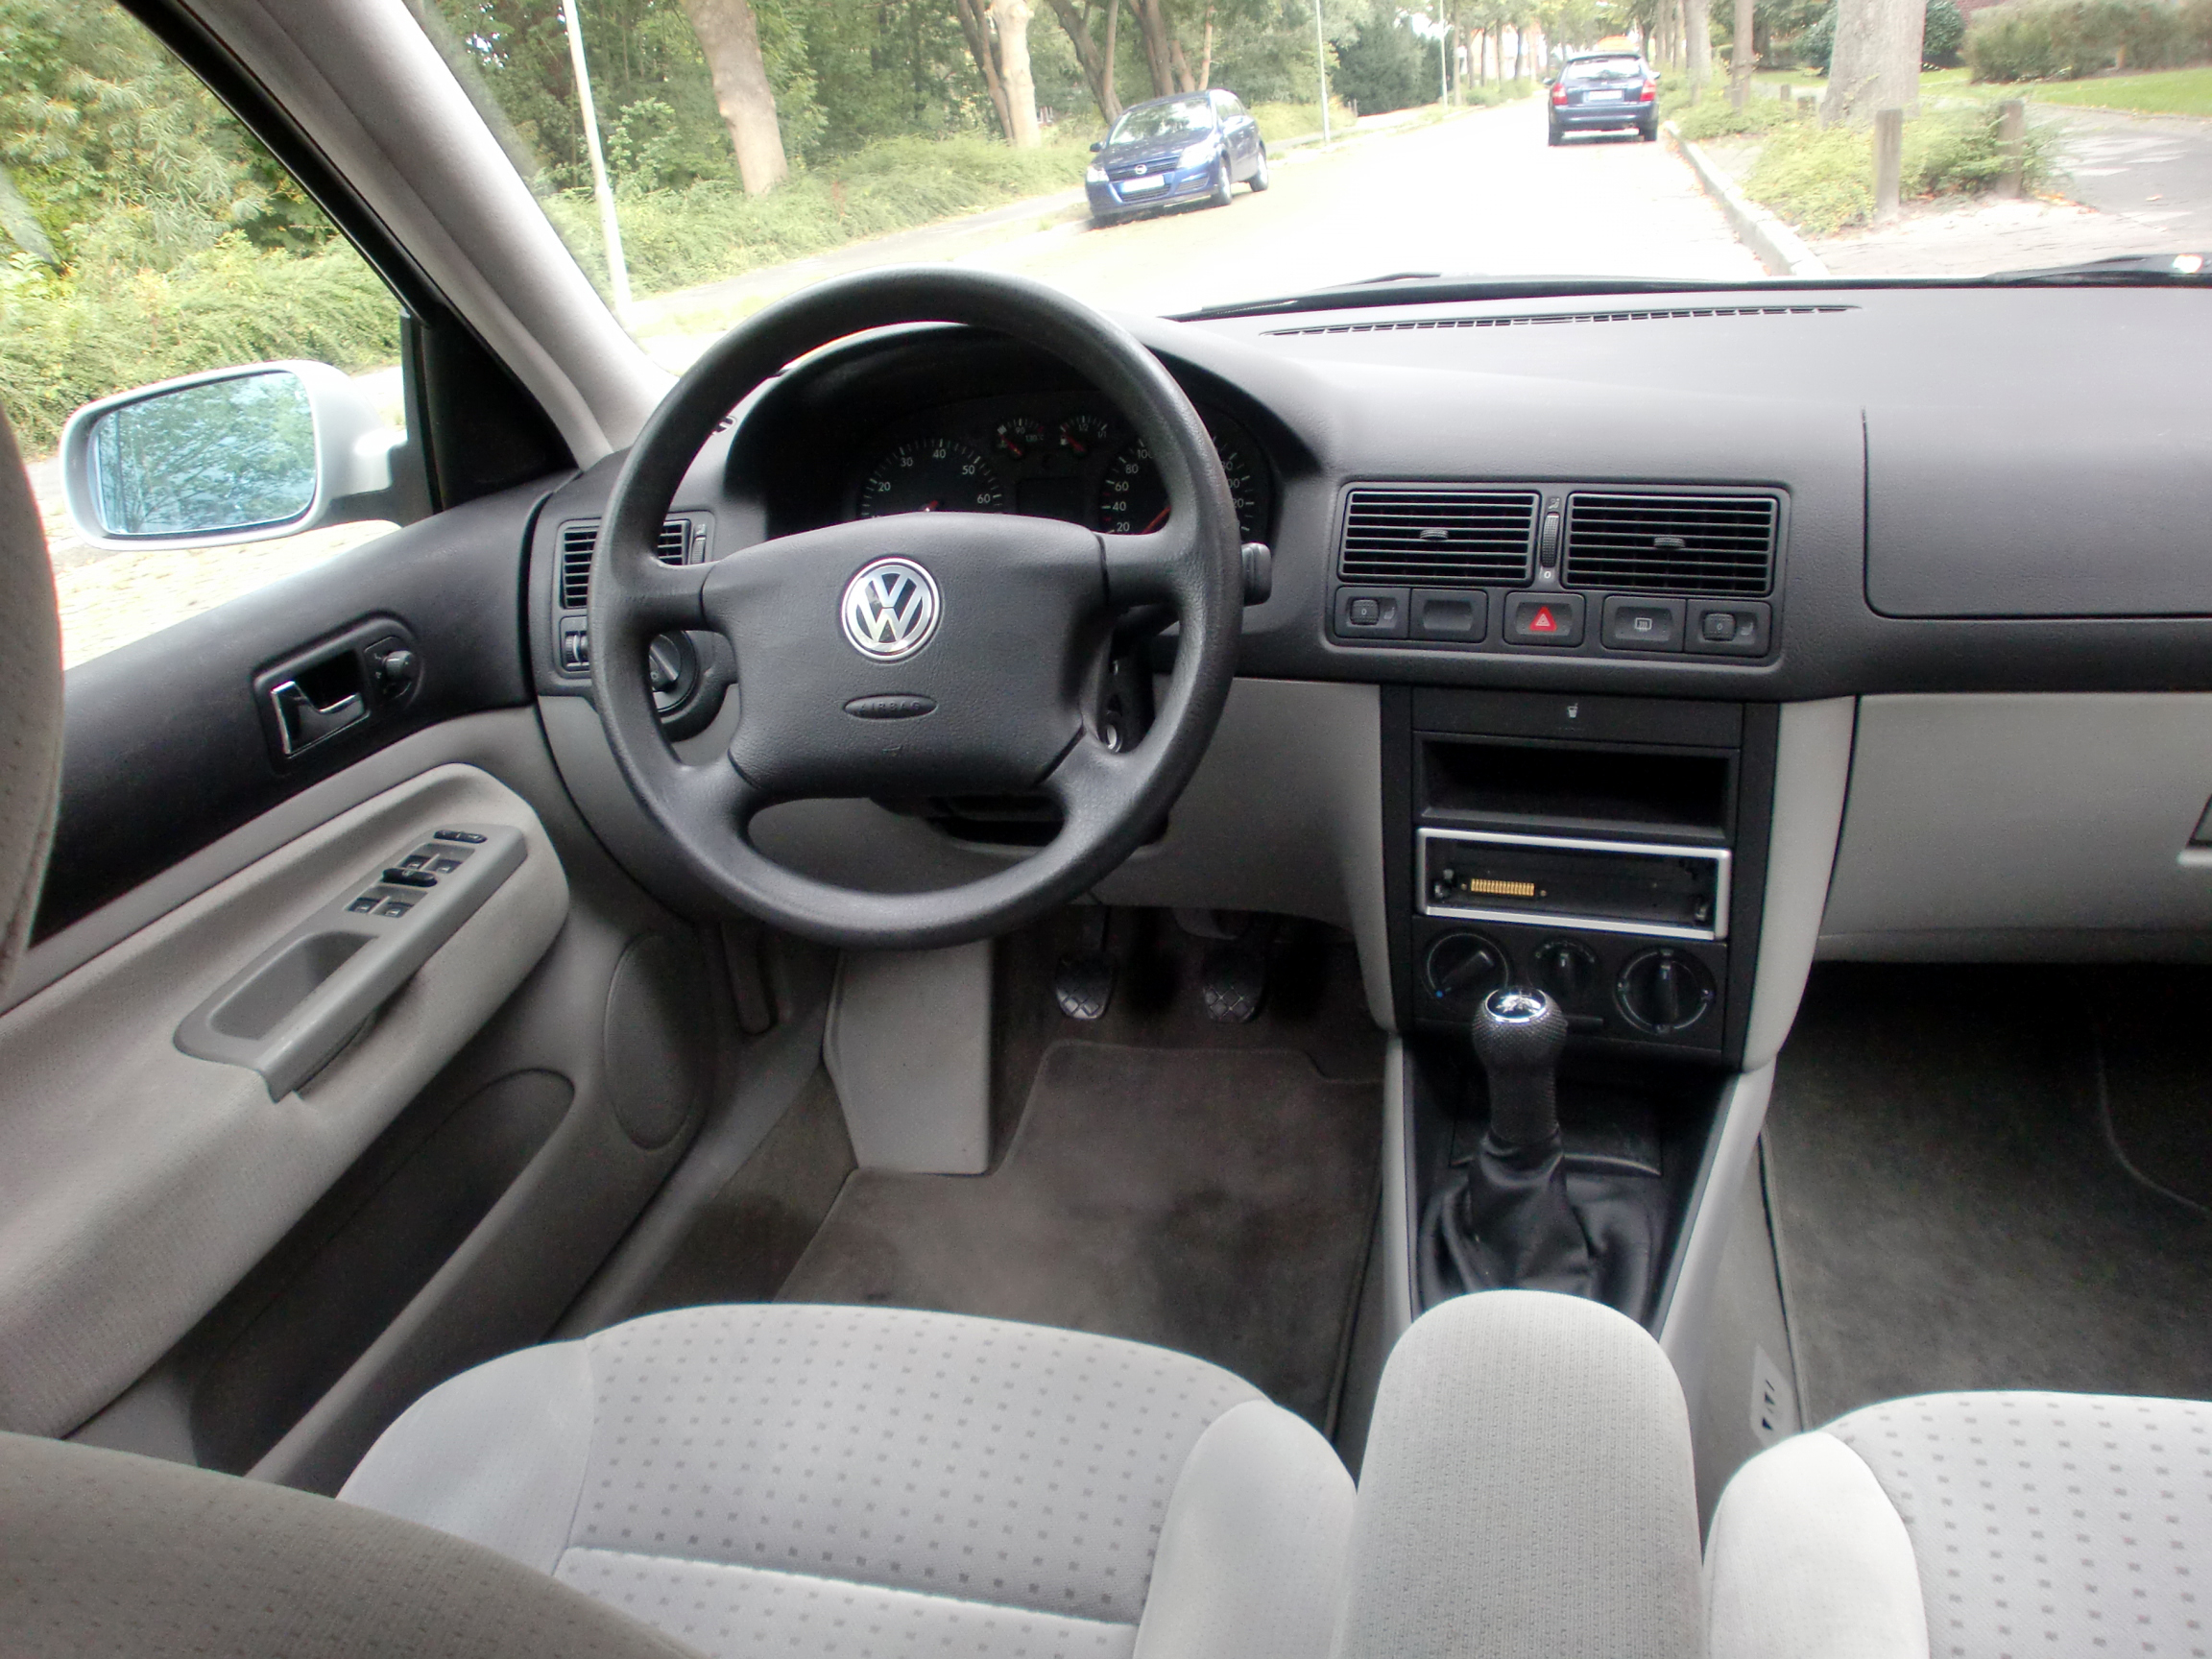 Slovenien forbedre katastrofe My personal car reviews: VW Golf IV 1.6 (my own car) | FinalGear.com Forums